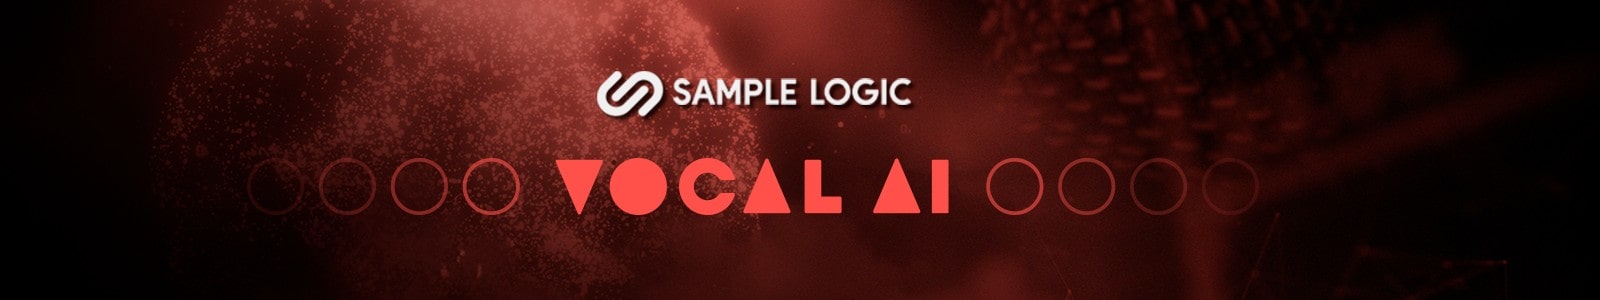 Vocal AI by Sample Logic